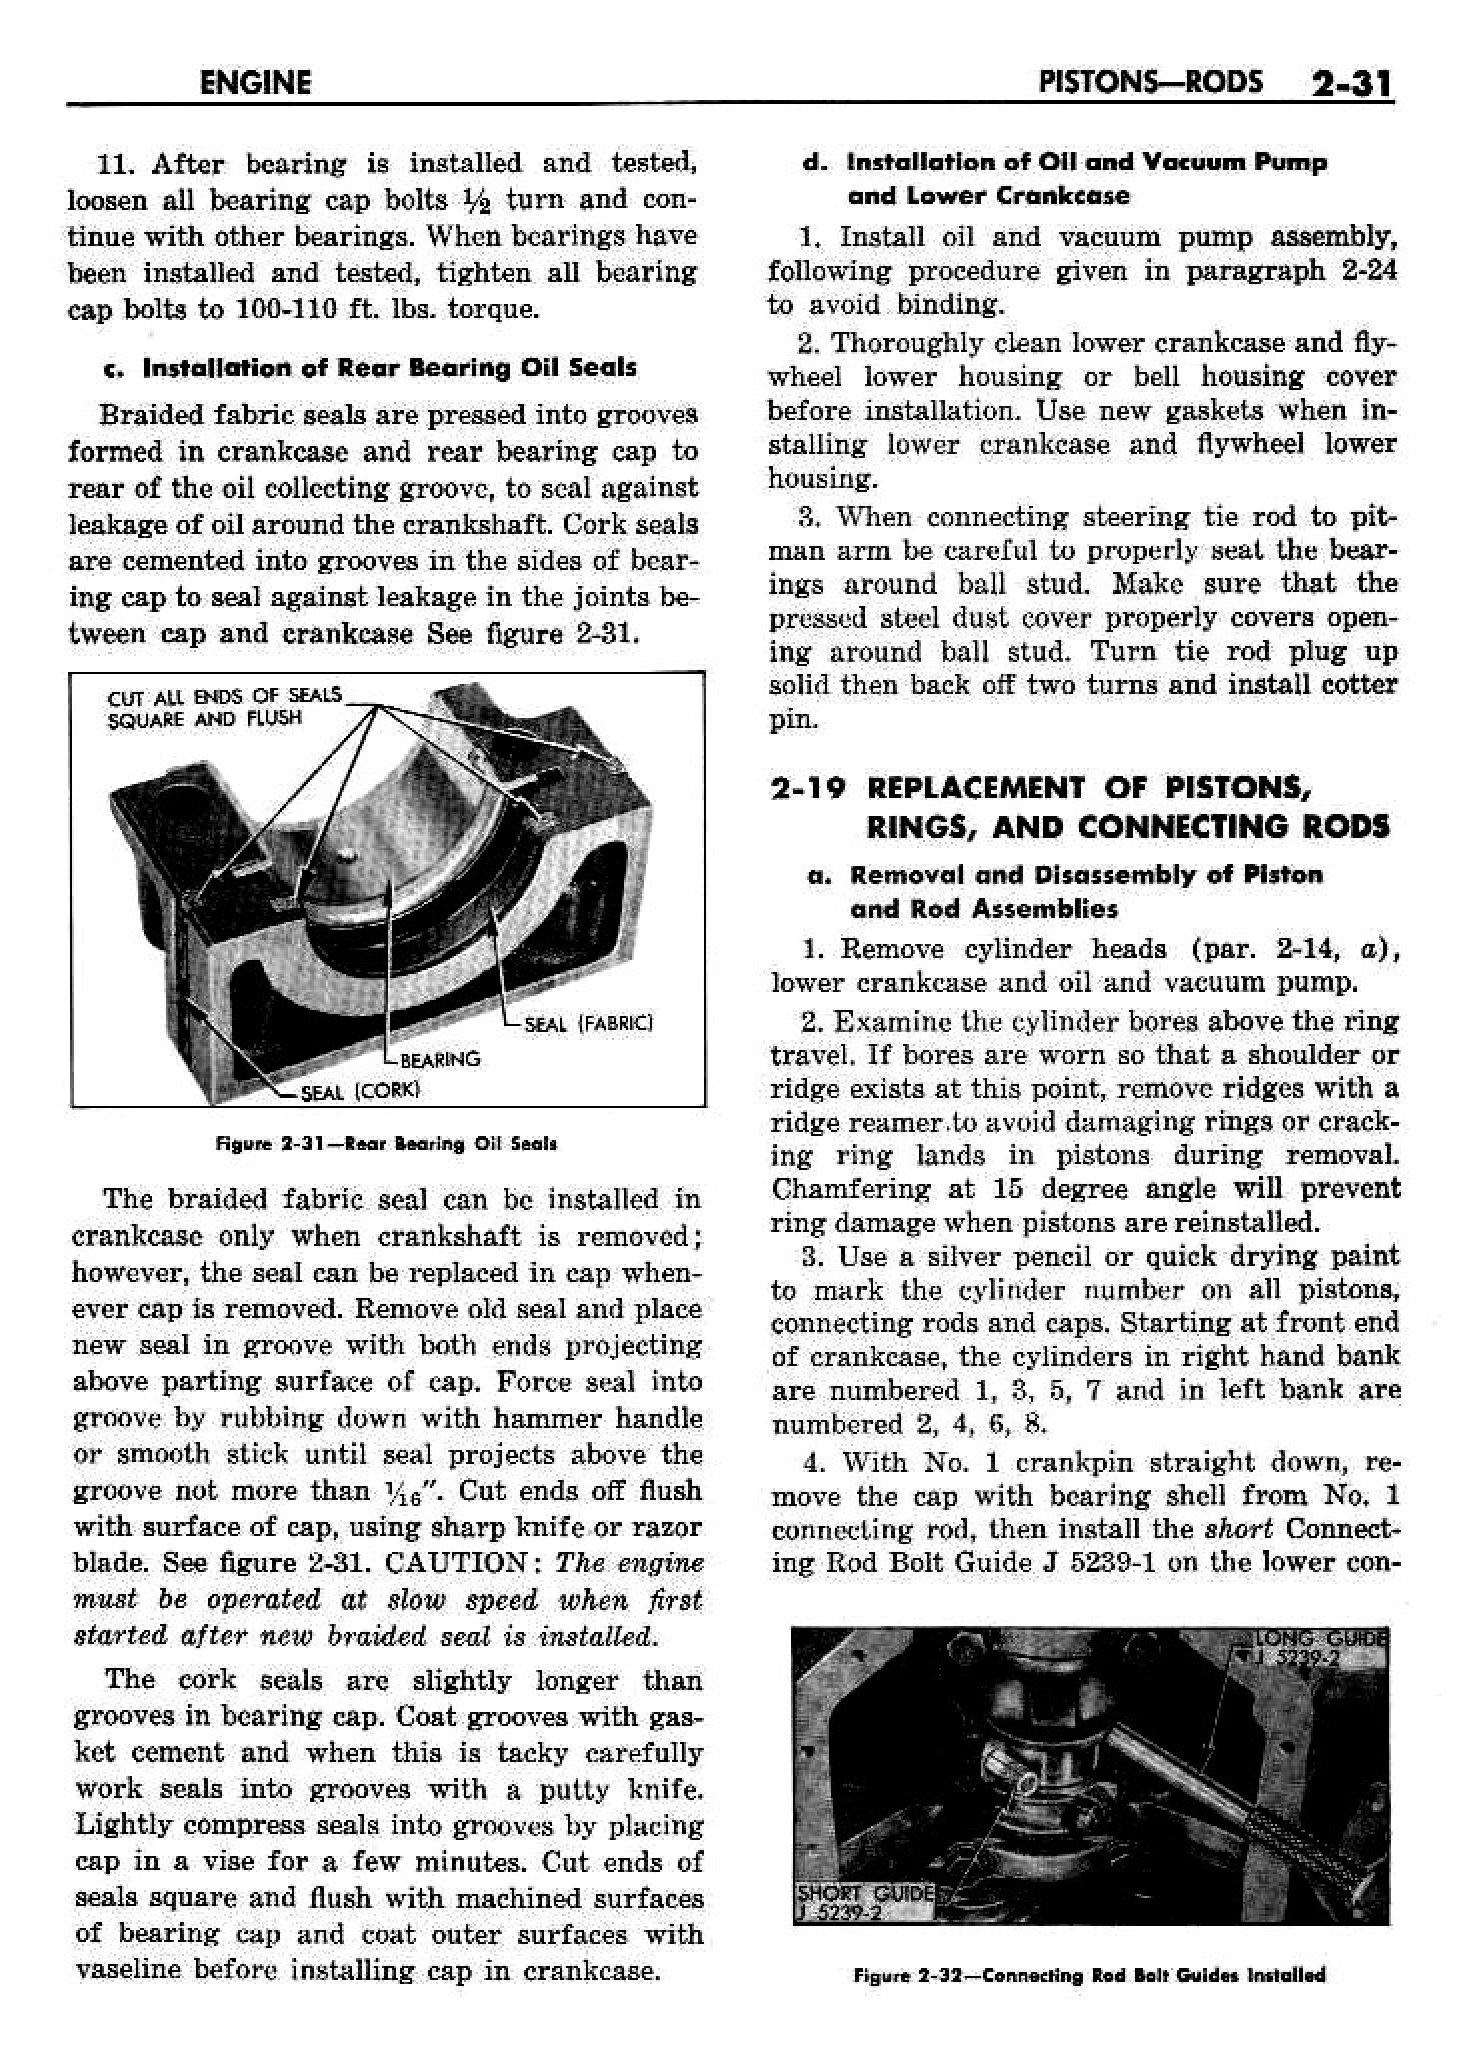 n_03 1958 Buick Shop Manual - Engine_31.jpg